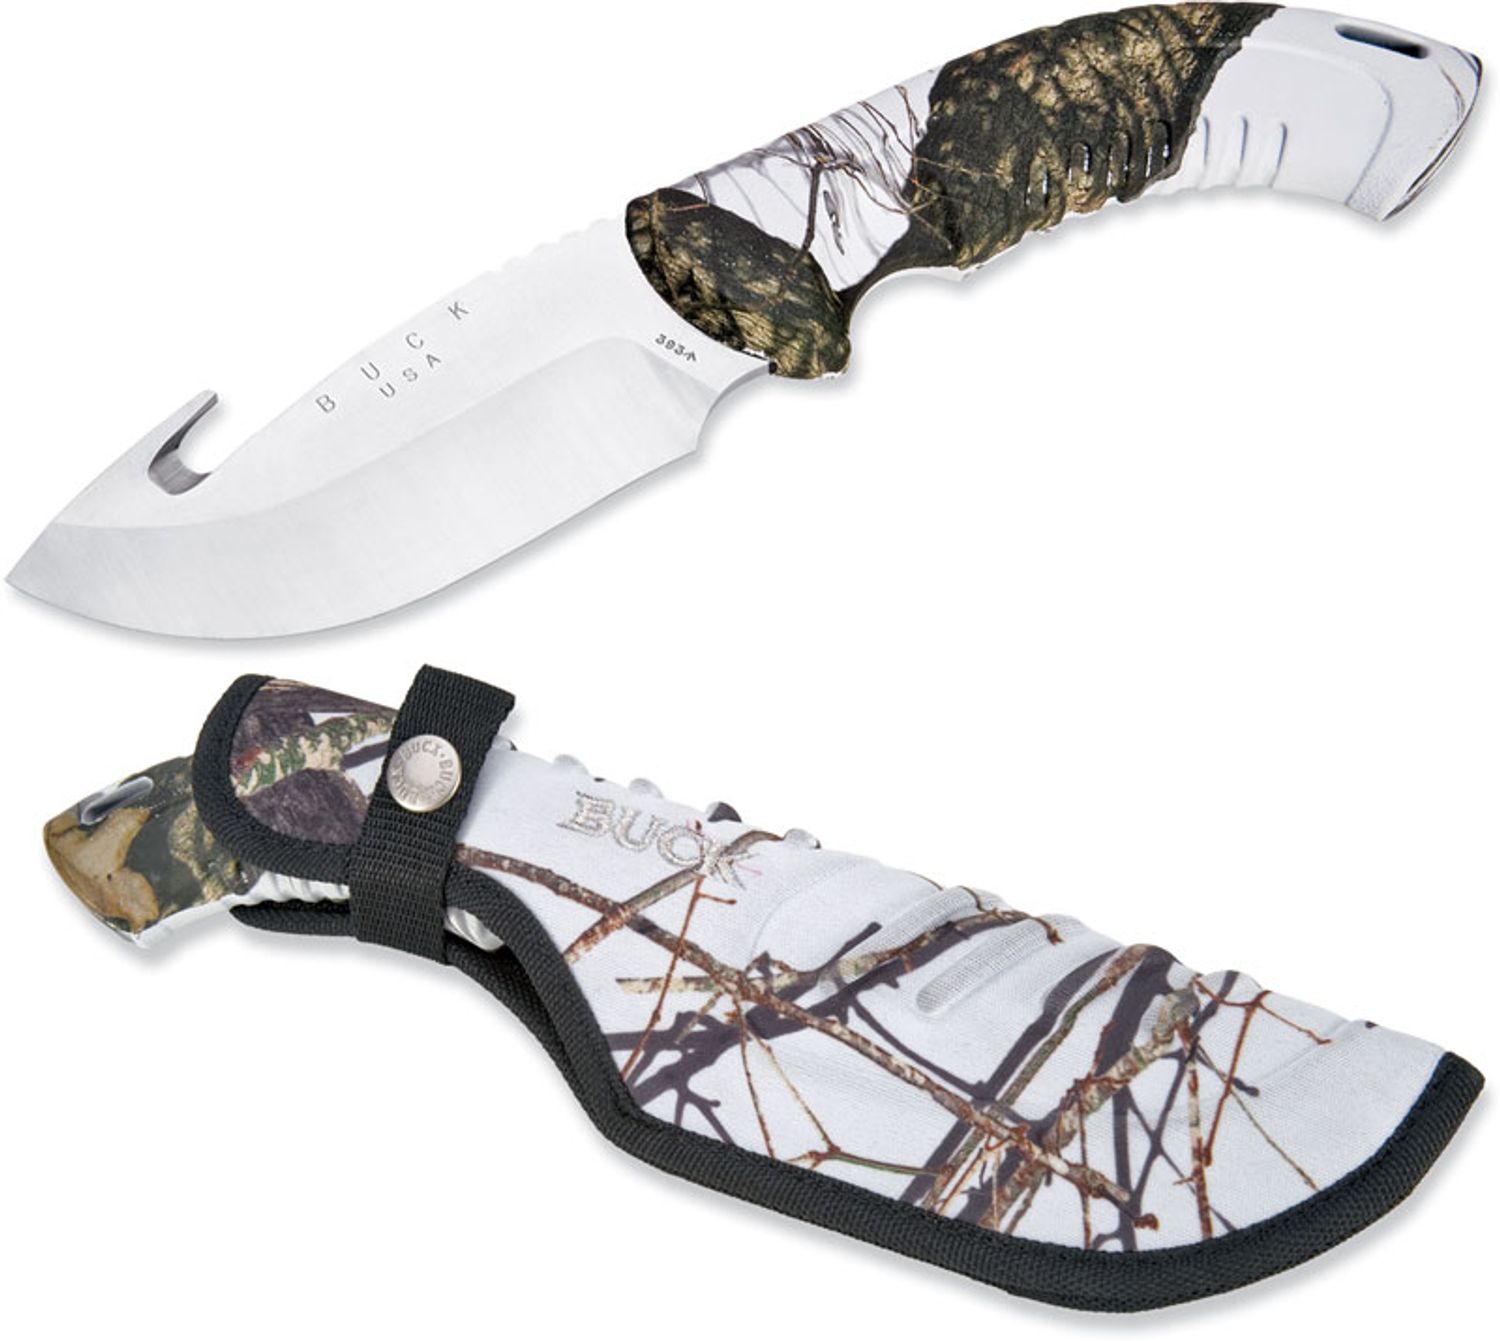 Buck Omni Hunter 12PT 4 Fixed Blade with Gut Hook, Mossy Oak Winter Camo  Handles - KnifeCenter - BU393CMG8 - Discontinued